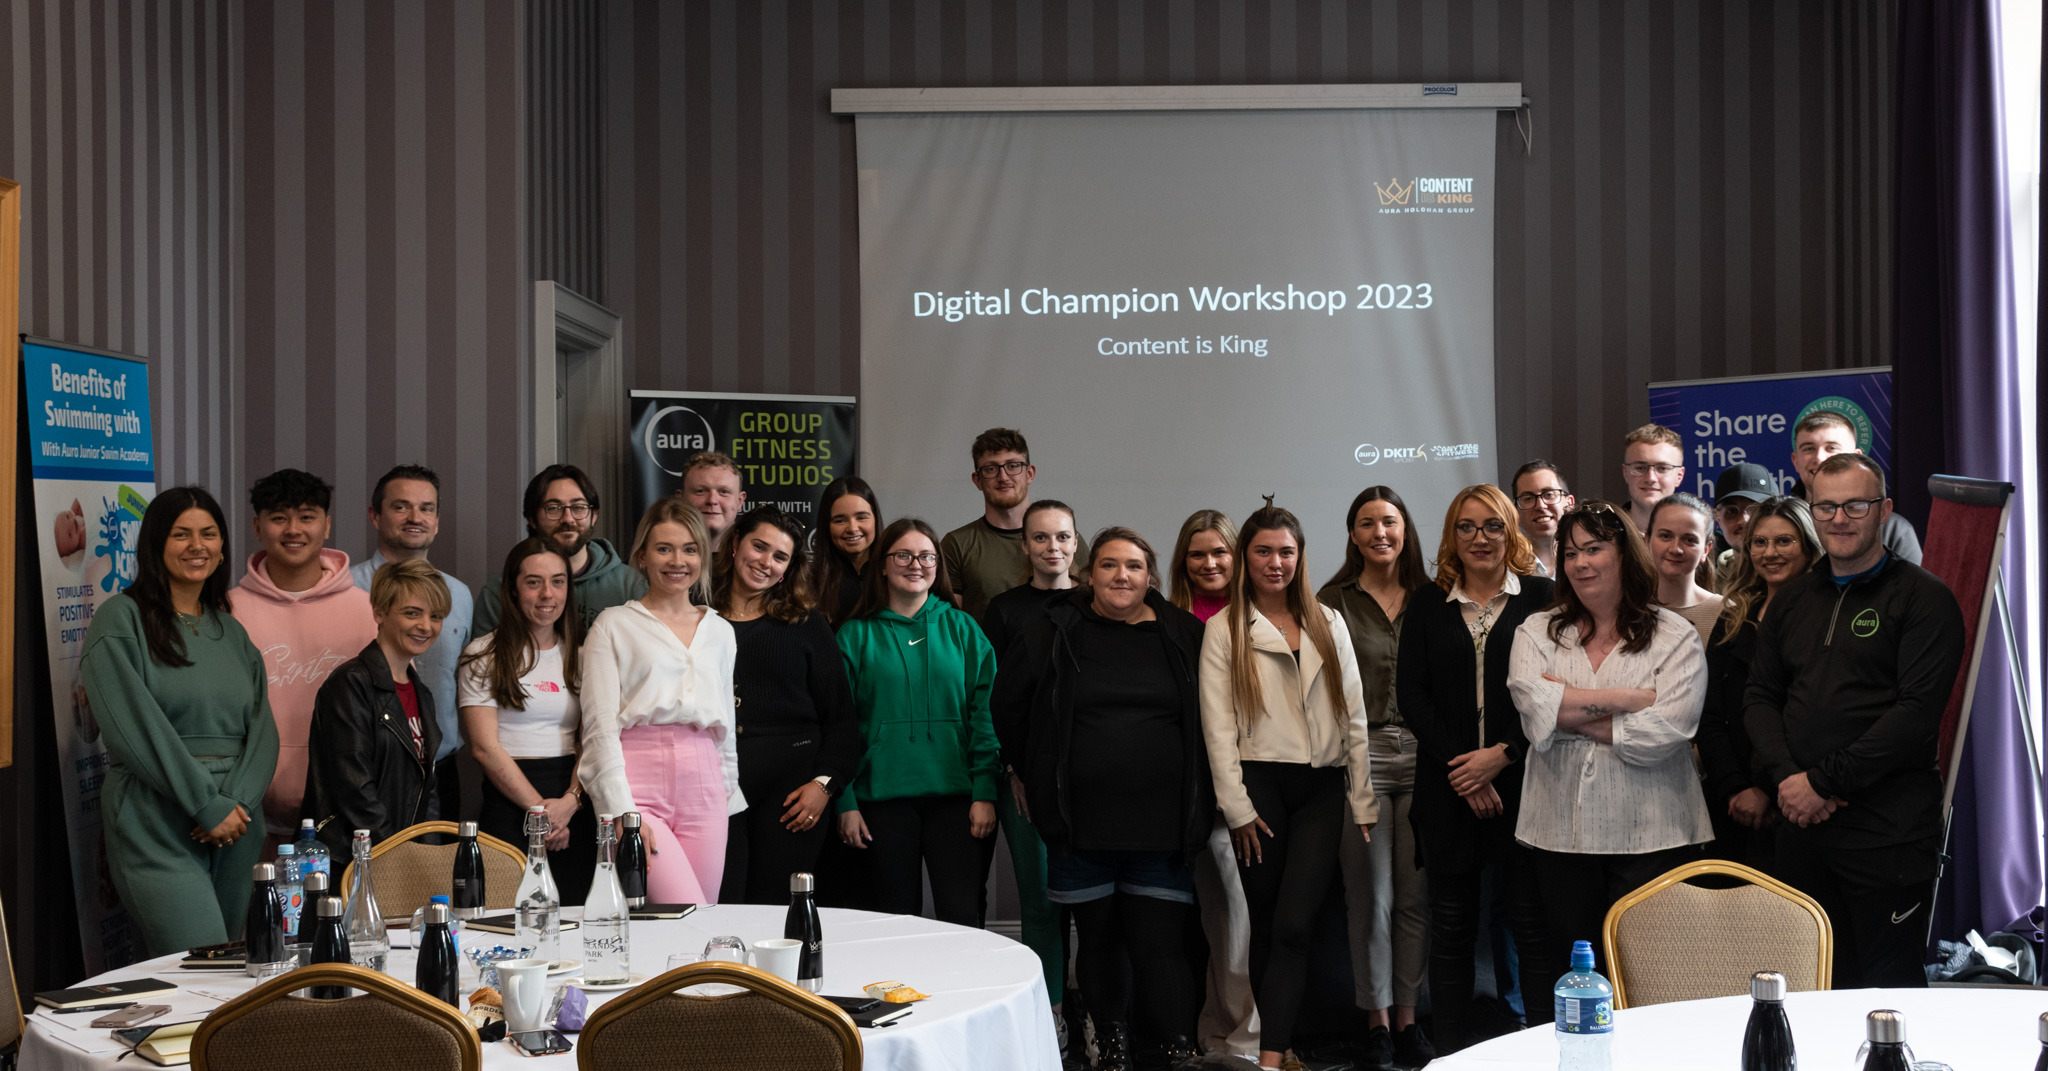 Digital Champion Workshop 2023 Takes Place